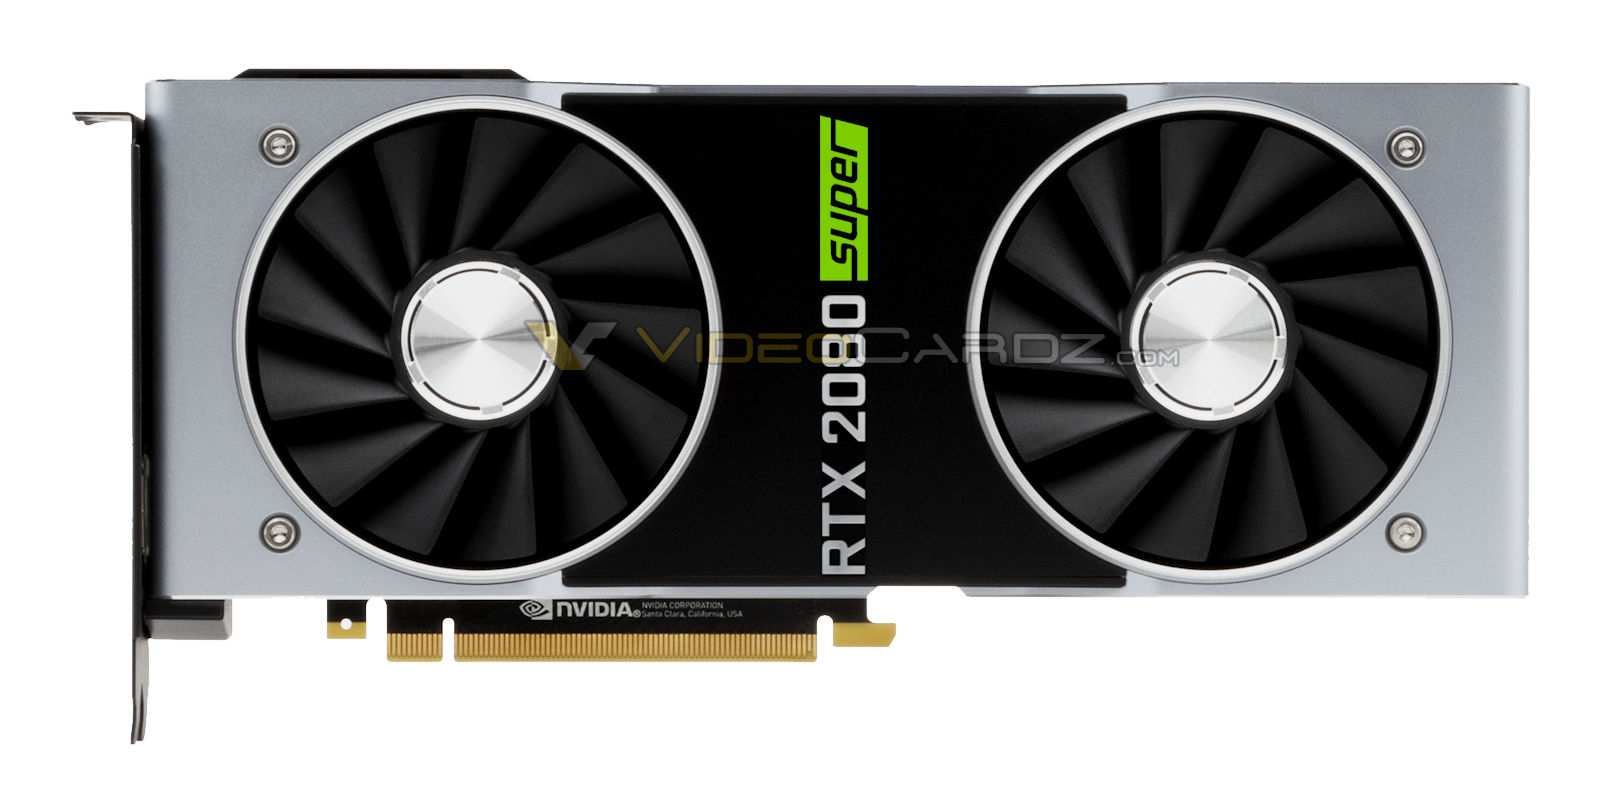 NVIDIA GeForce RTX 2080 Super GPU - Benchmarks and Specs